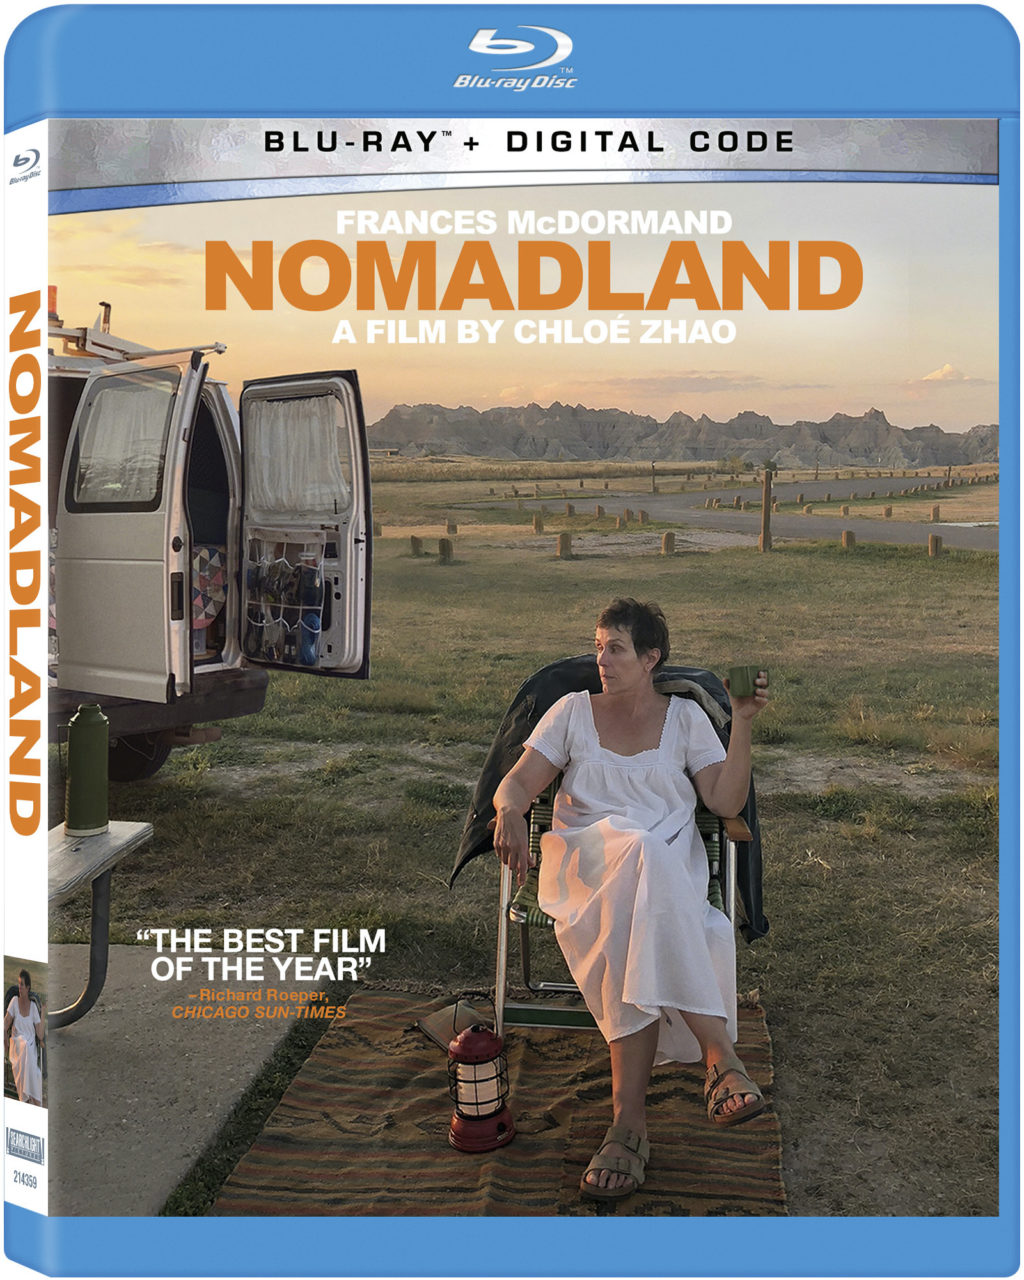 Nomadland Blu-Ray Combo Pack cover (Walt Disney Studios Home Entertainment)